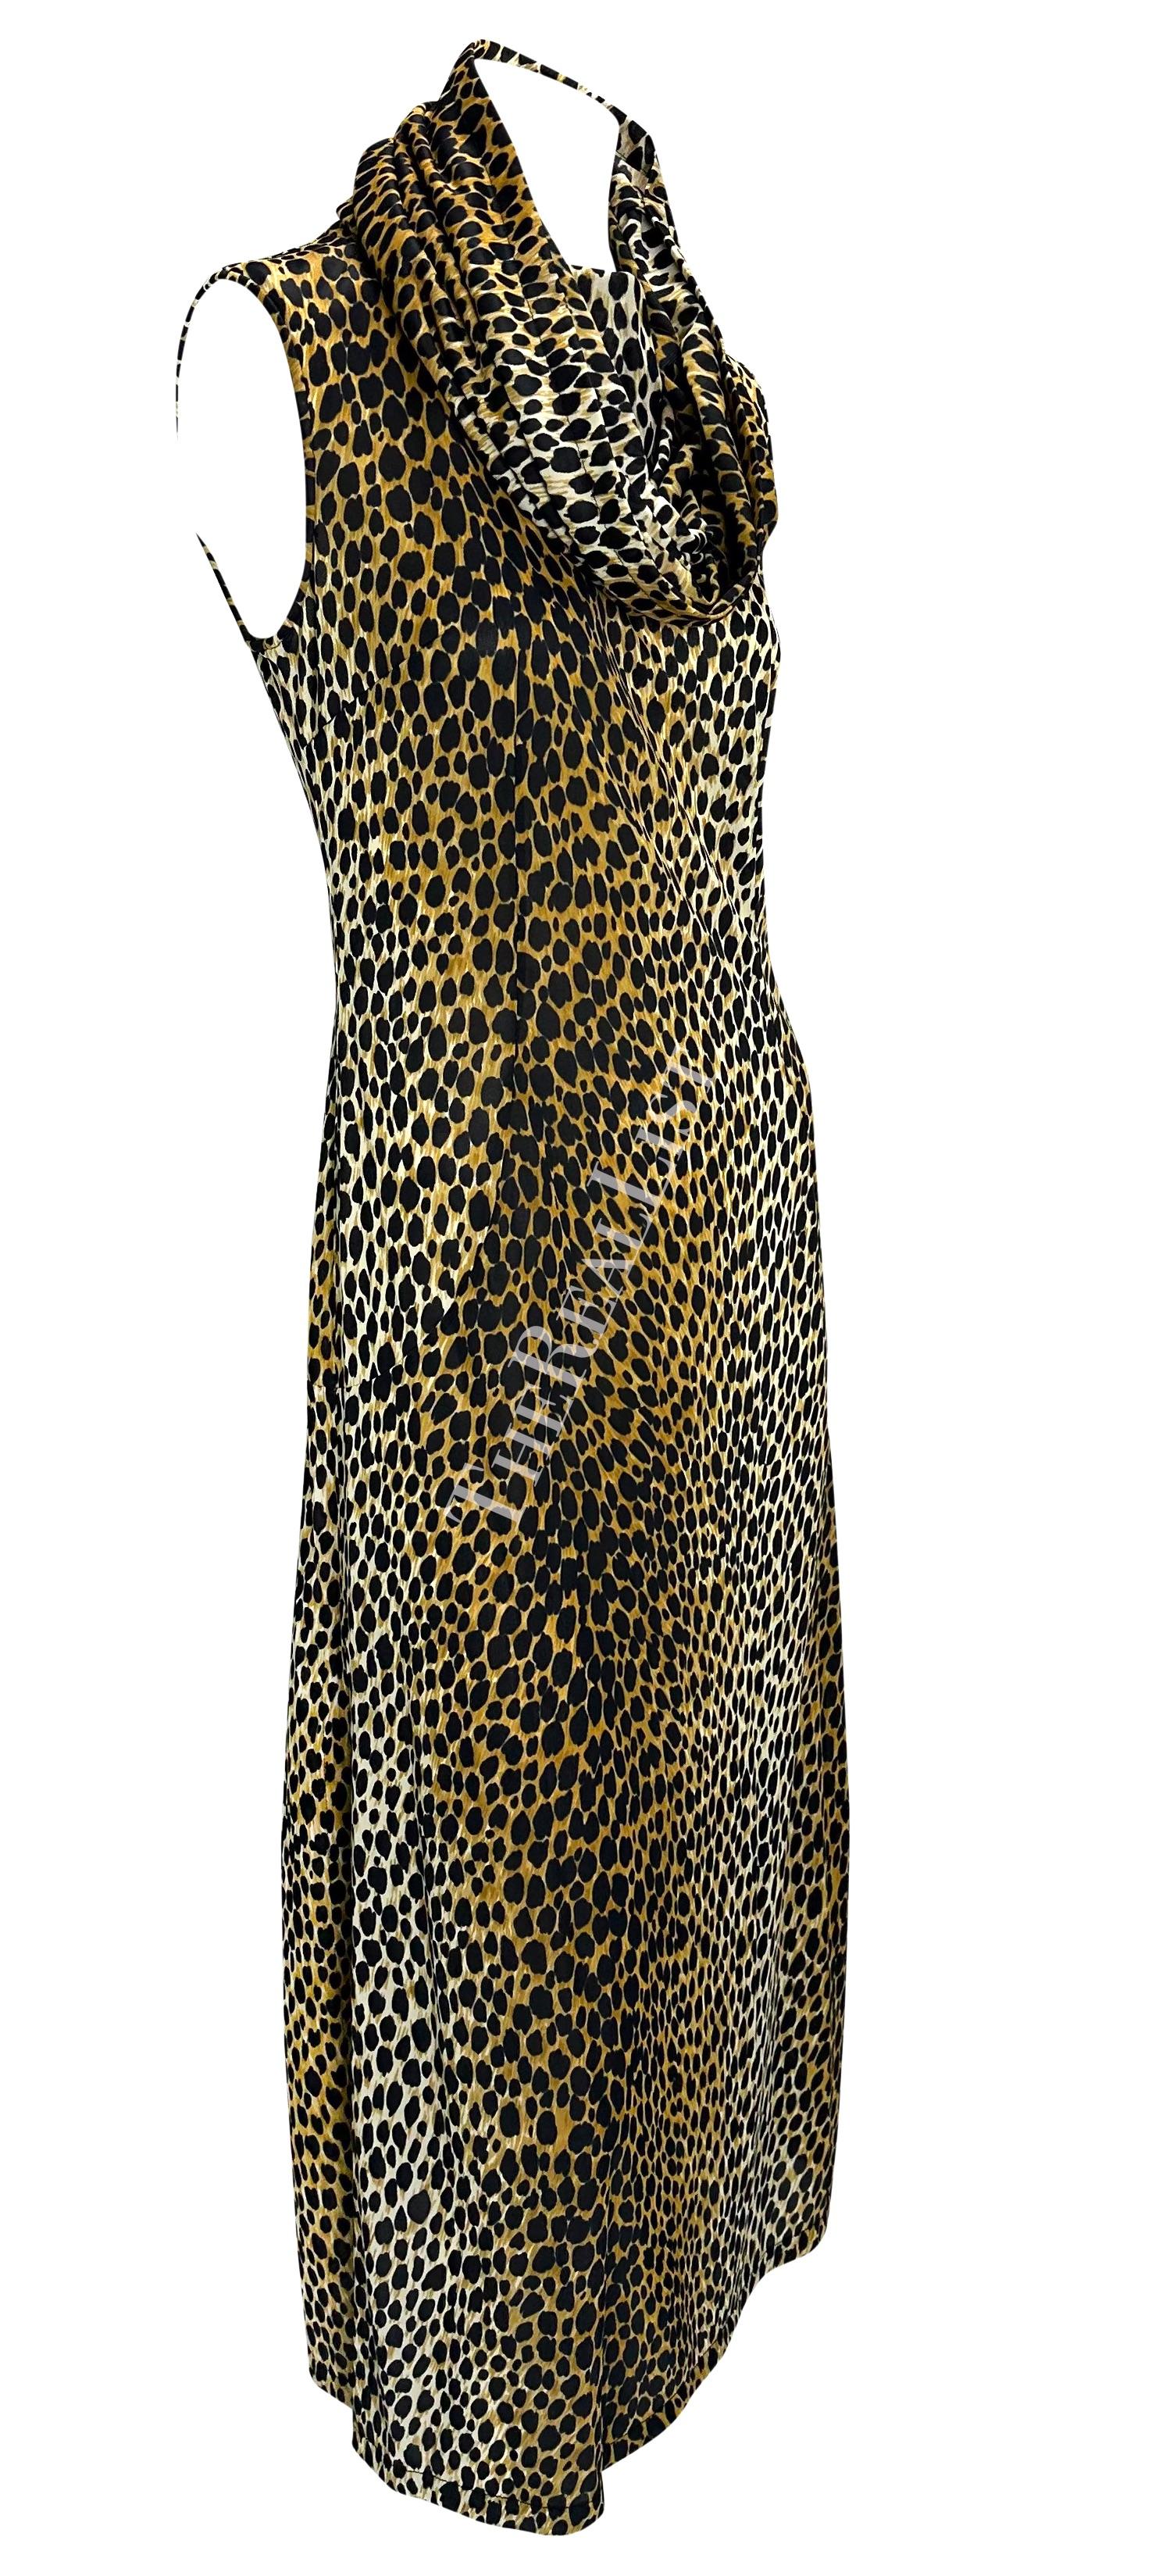 S/S 1996 Dolce & Gabbana Hooded Stretch Leopard Print Hit Slit Dress For Sale 11